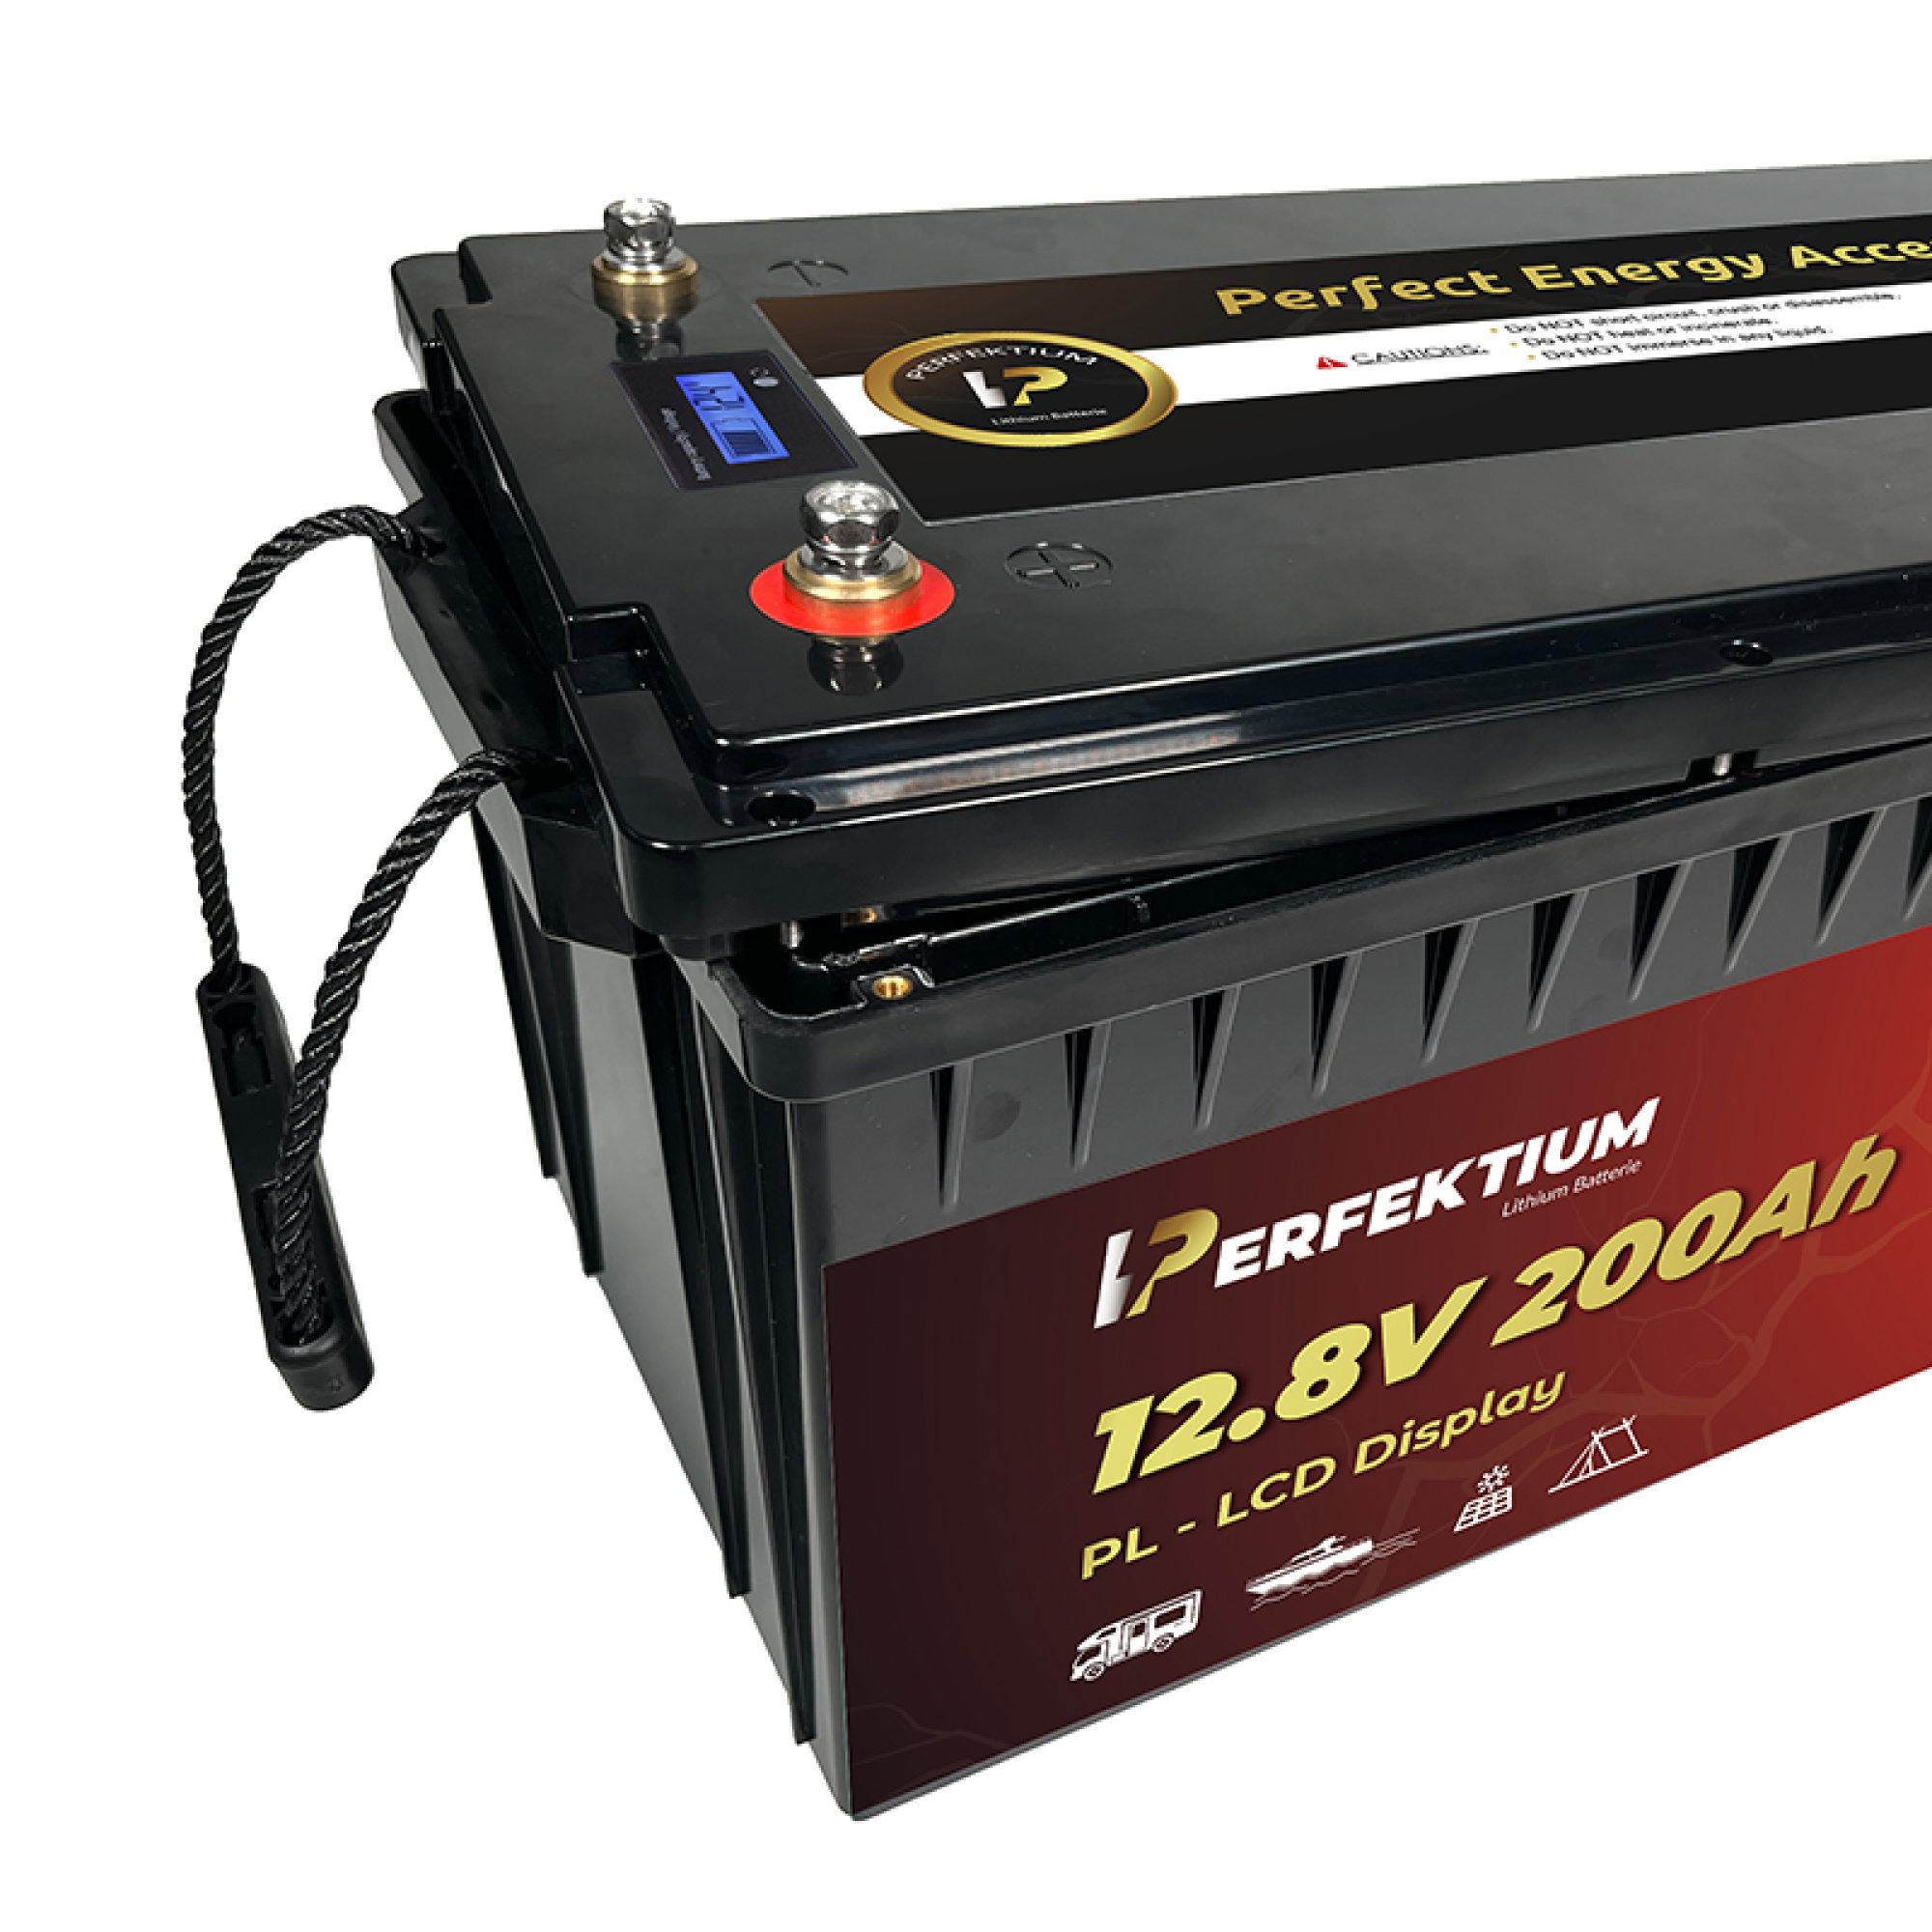 Perfektium LiFePO4 PL-12.8V 200Ah – Lithium Batterie Smart BMS mit LCD – 3 Jahre Garantie